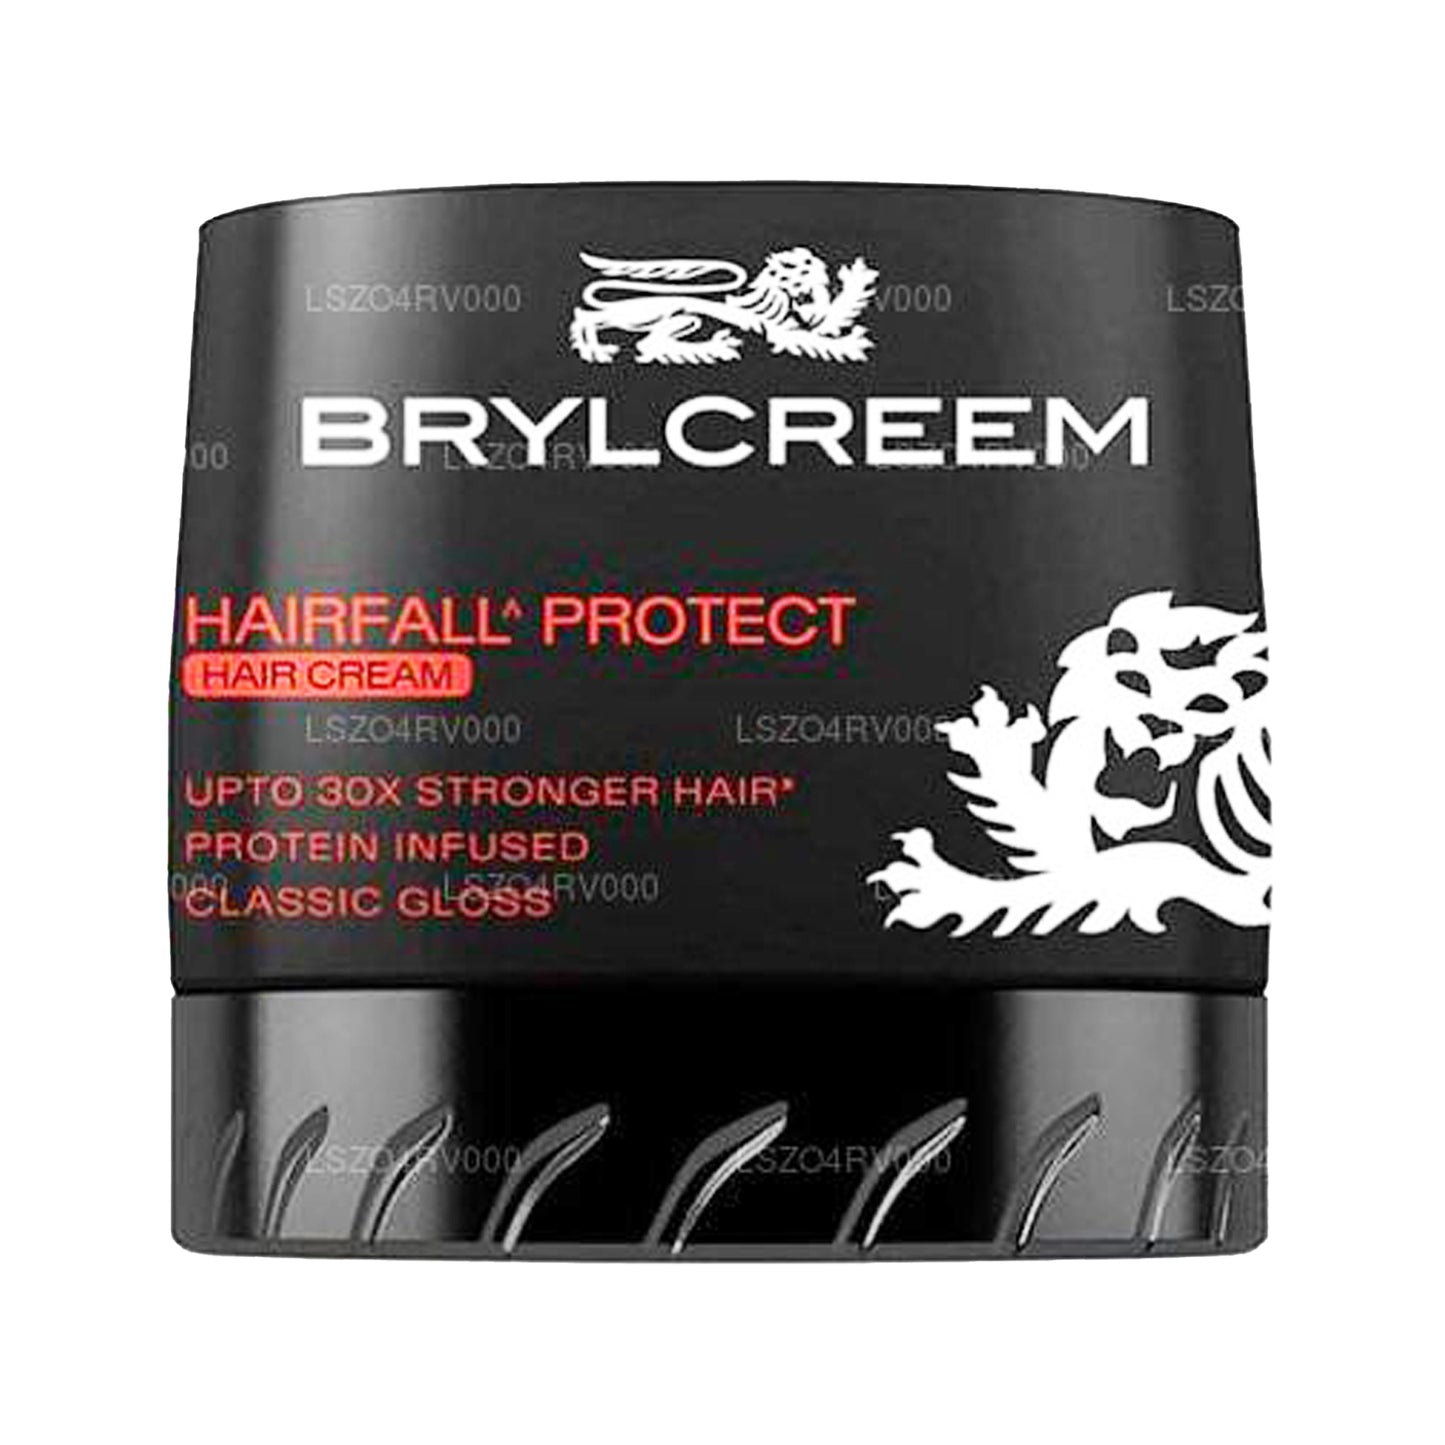 Brylcreem 脱发保护霜 (75g)